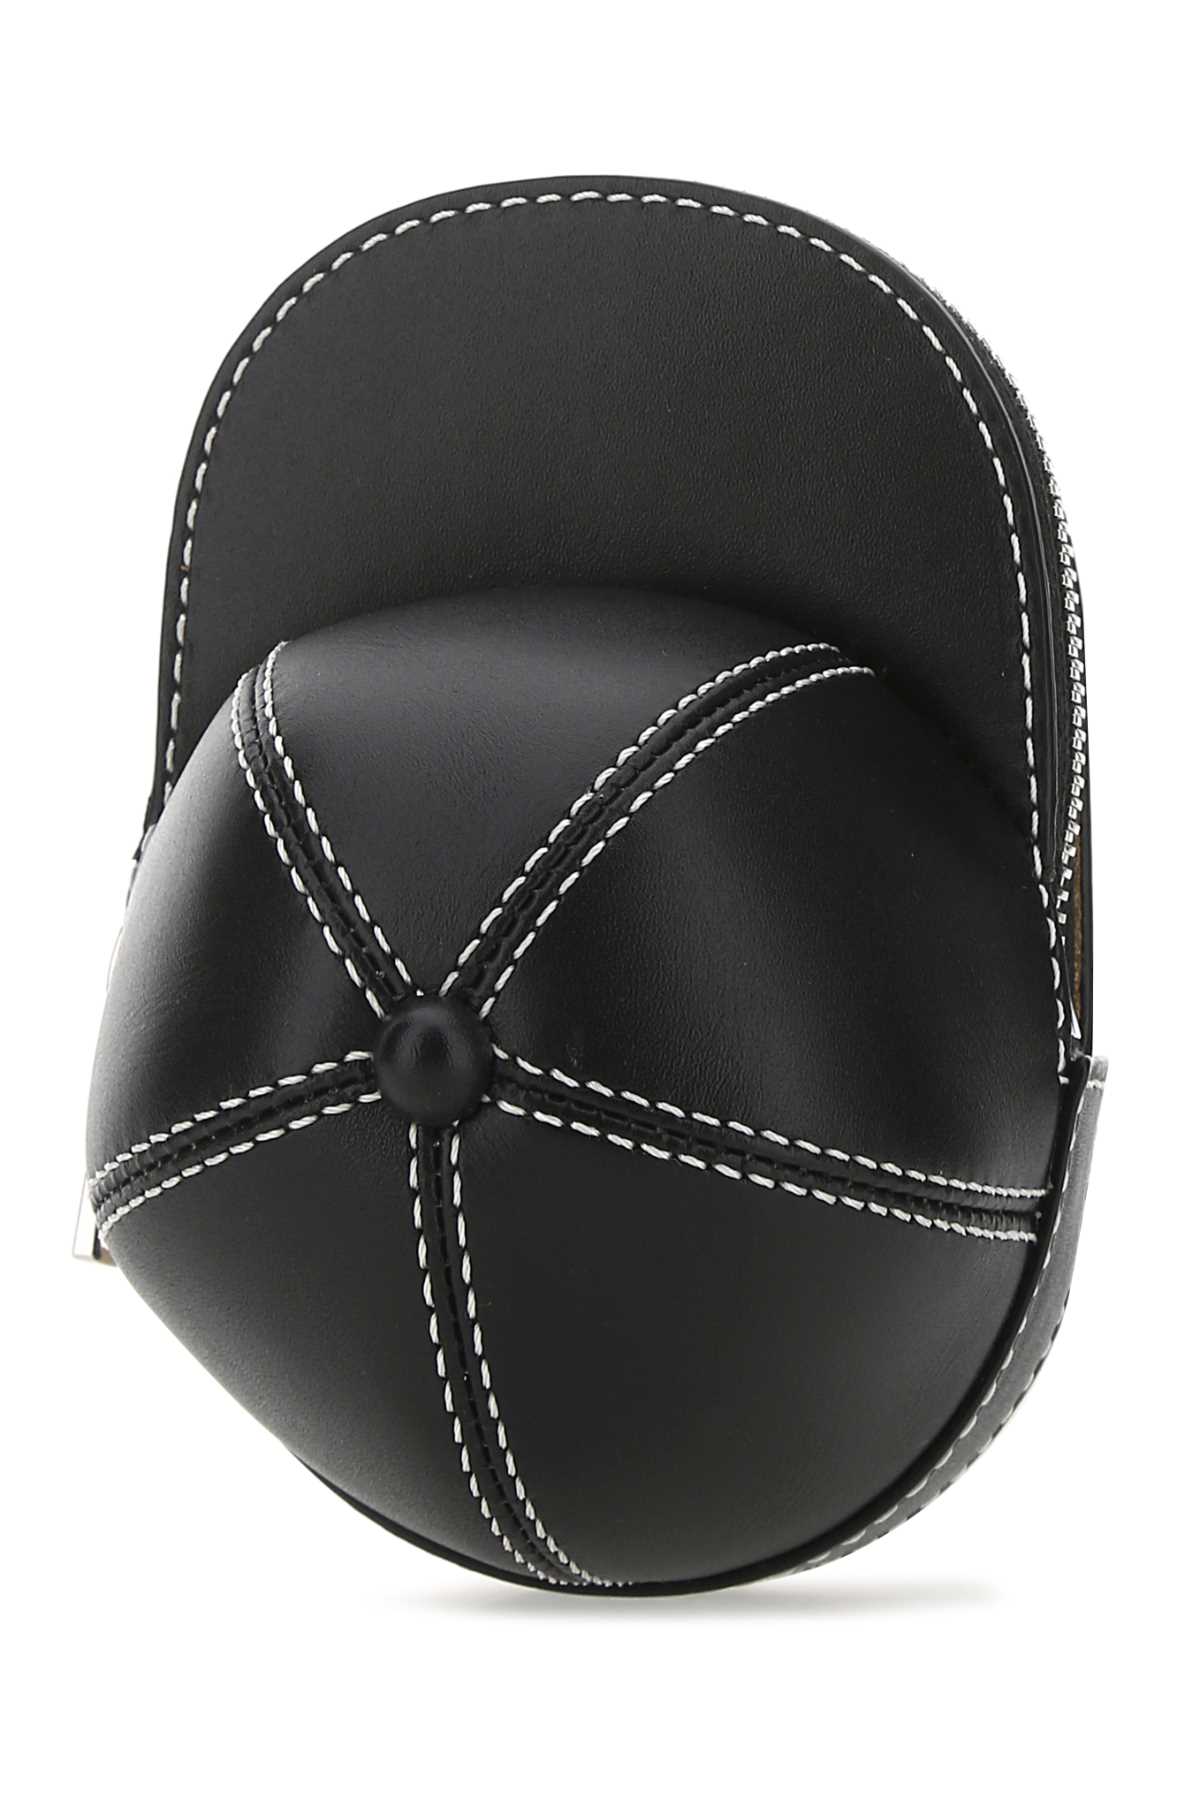 Jw Anderson Black Leather Mini Cap Crossbody Bag